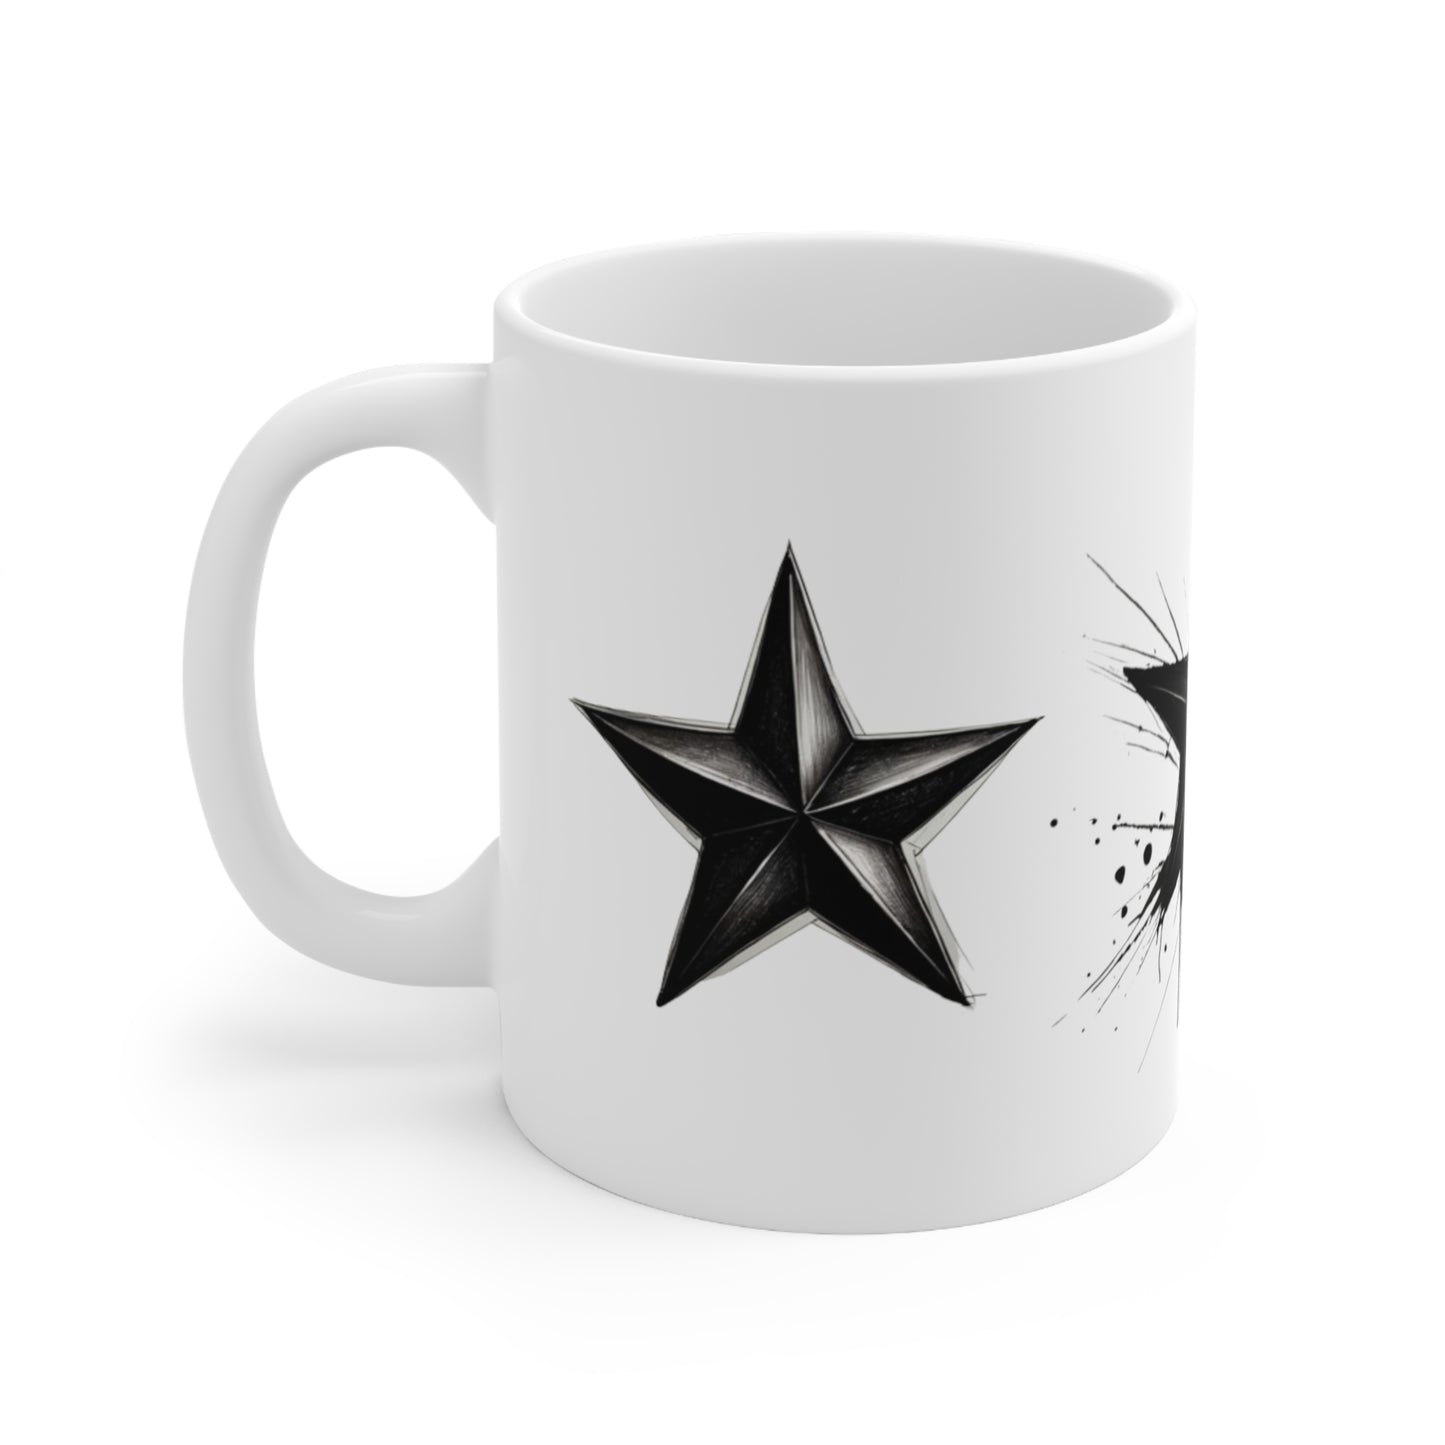 Black and White Sketched Stars Mug - Ceramic Coffee Mug 11oz